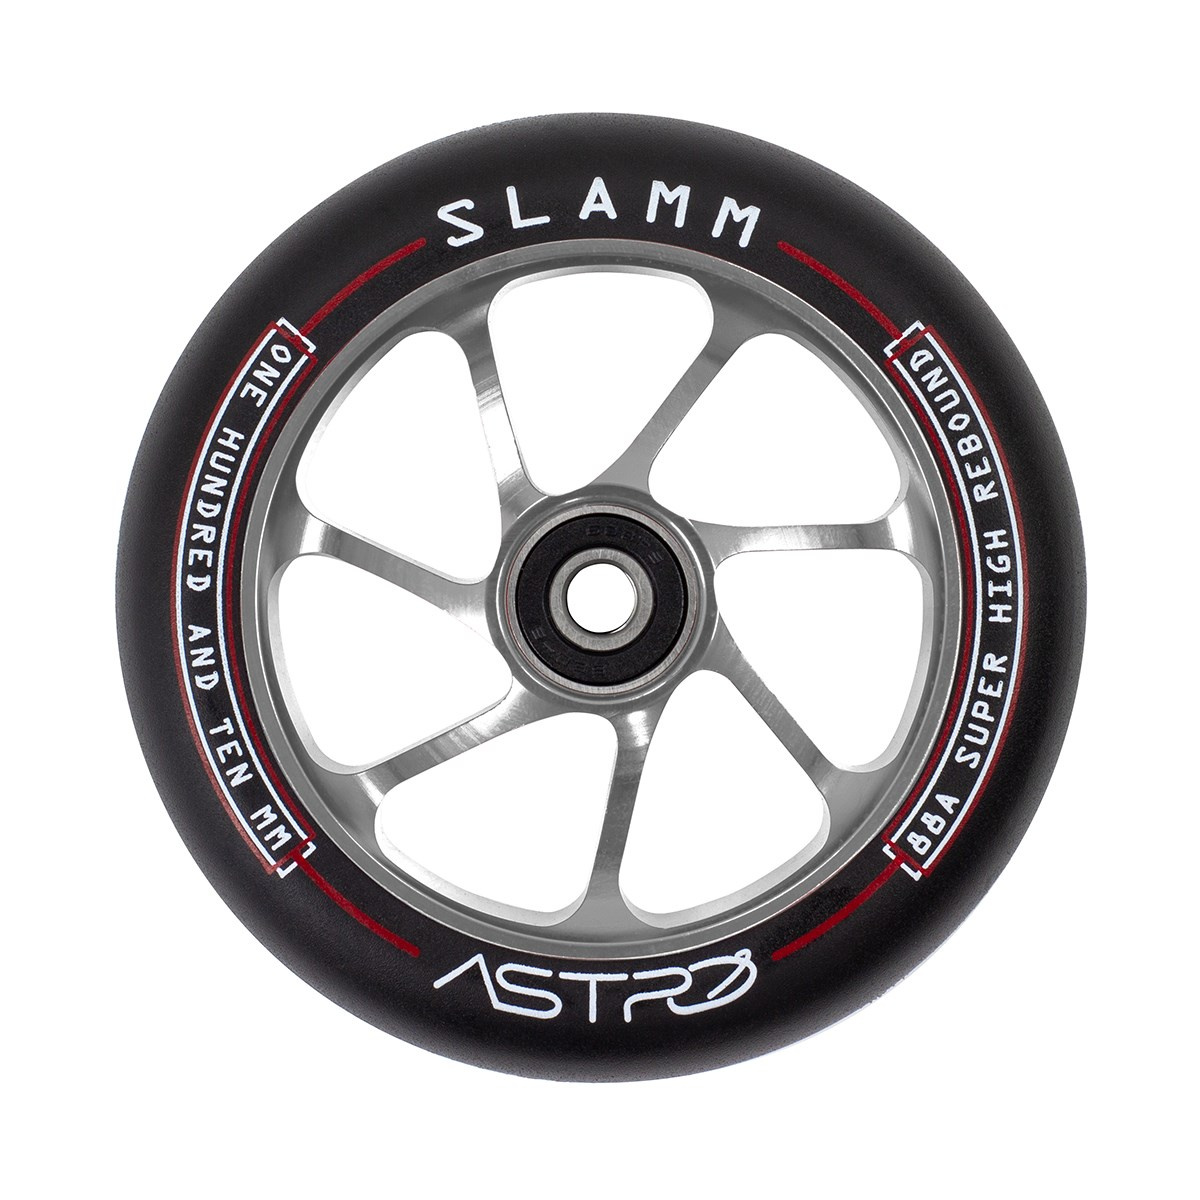 Slamm Astro 110mm Wheels - Chrome